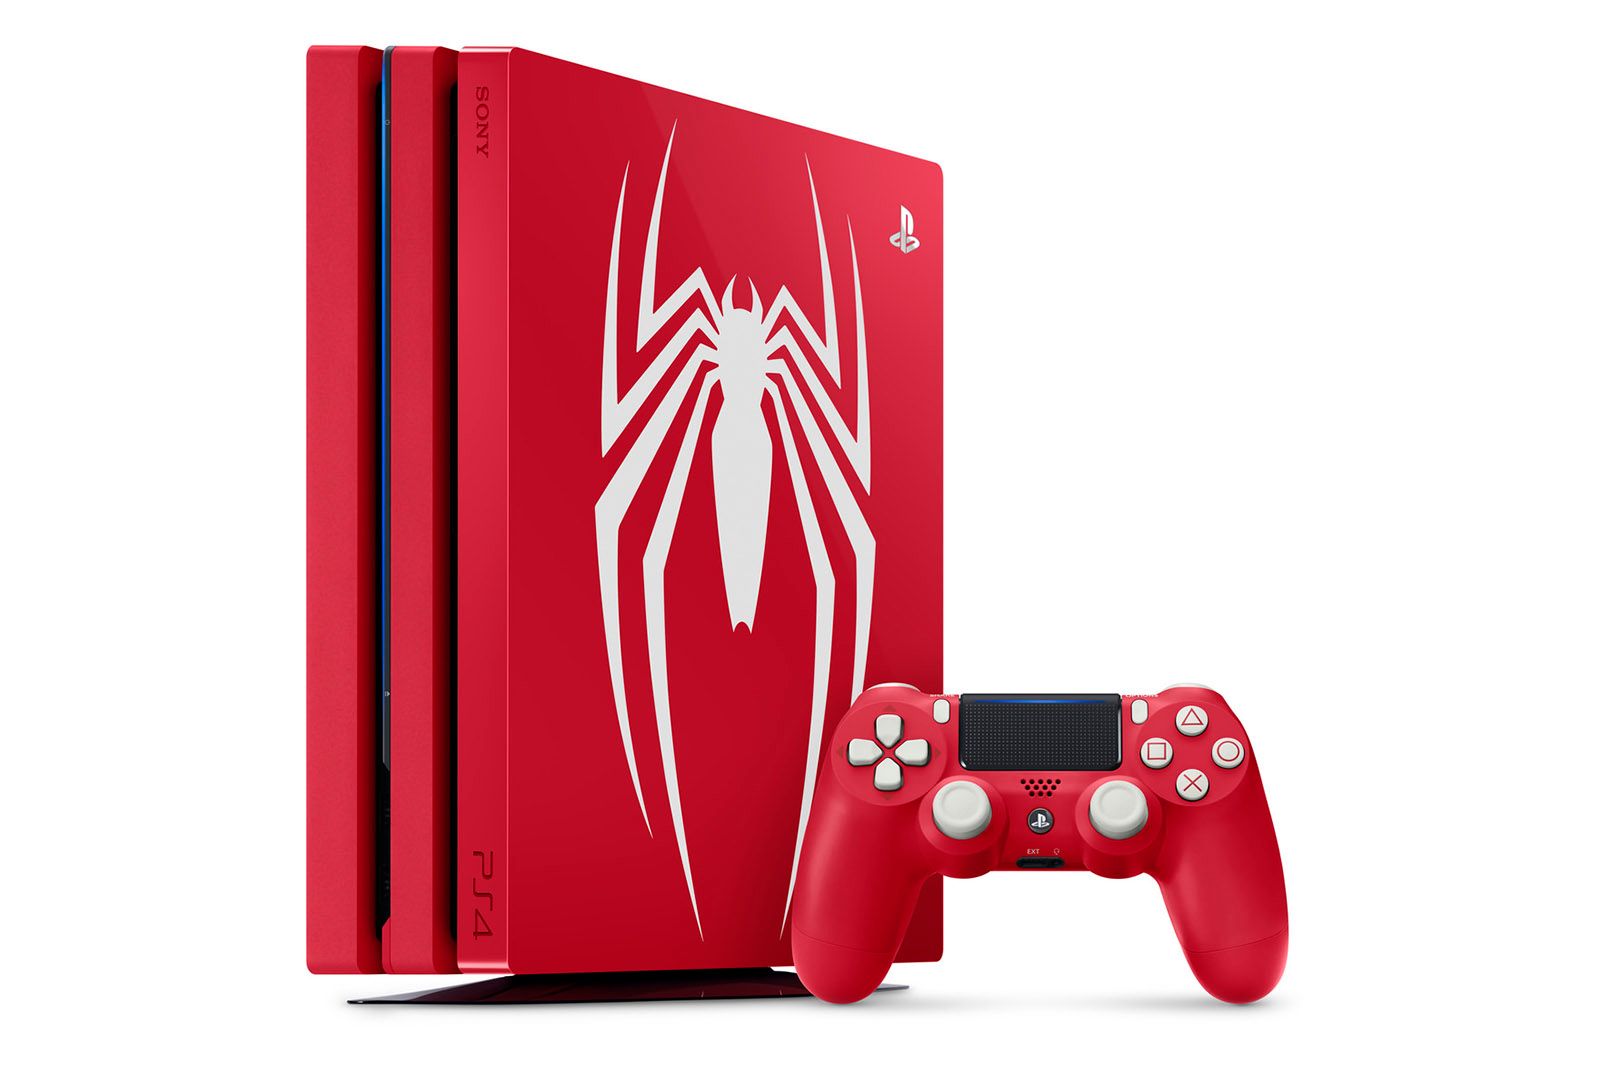 Spider-Man PS4 Pro image 1